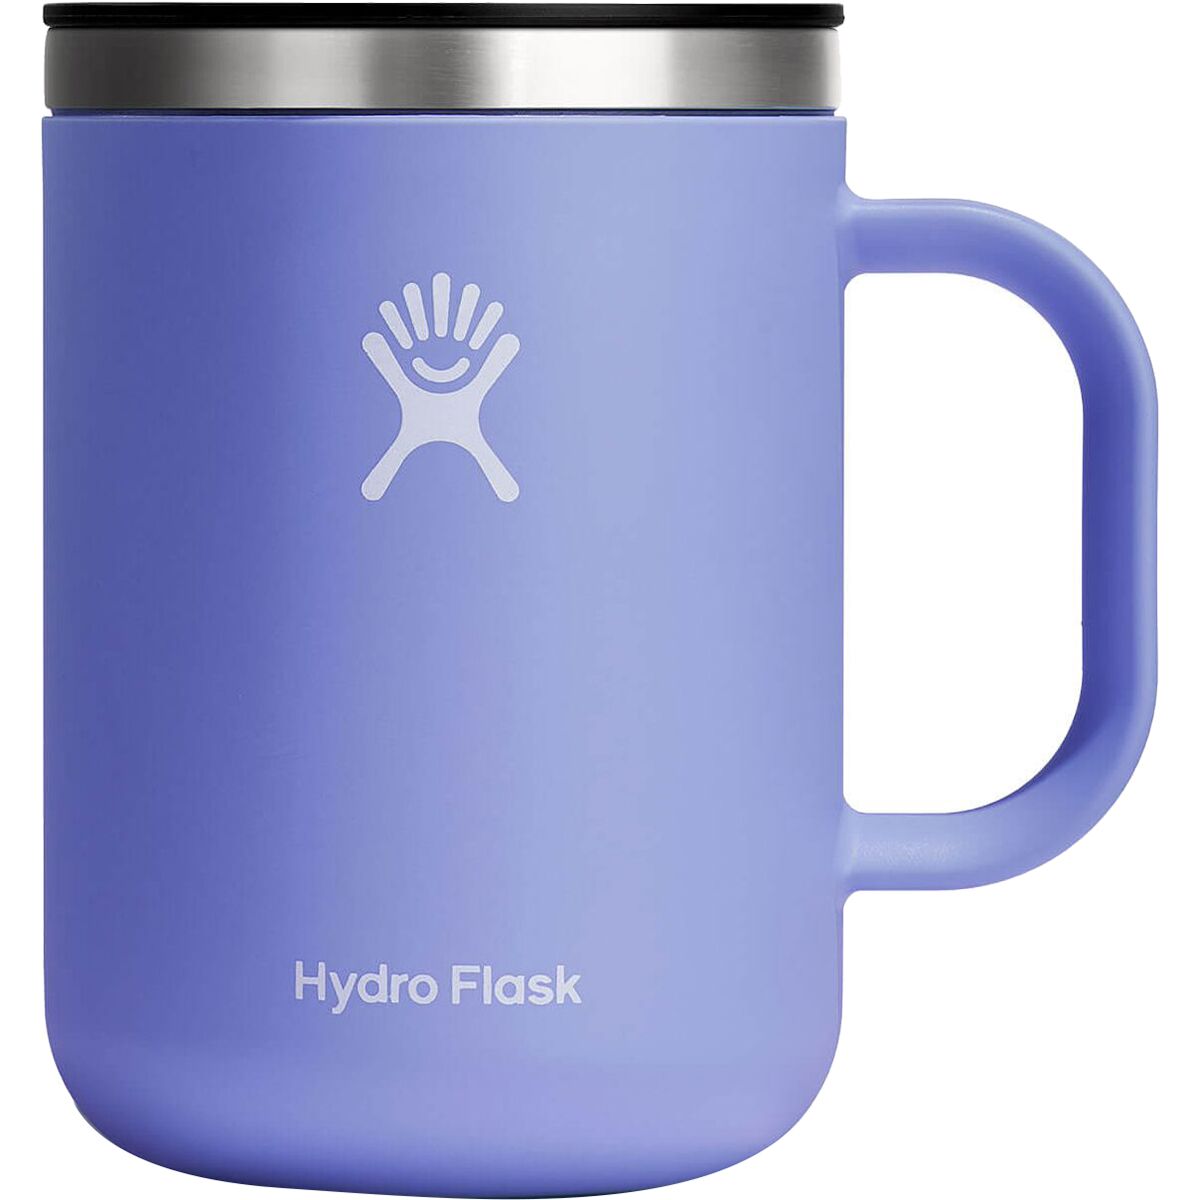 Hydro Flask 24oz Coffee Mug